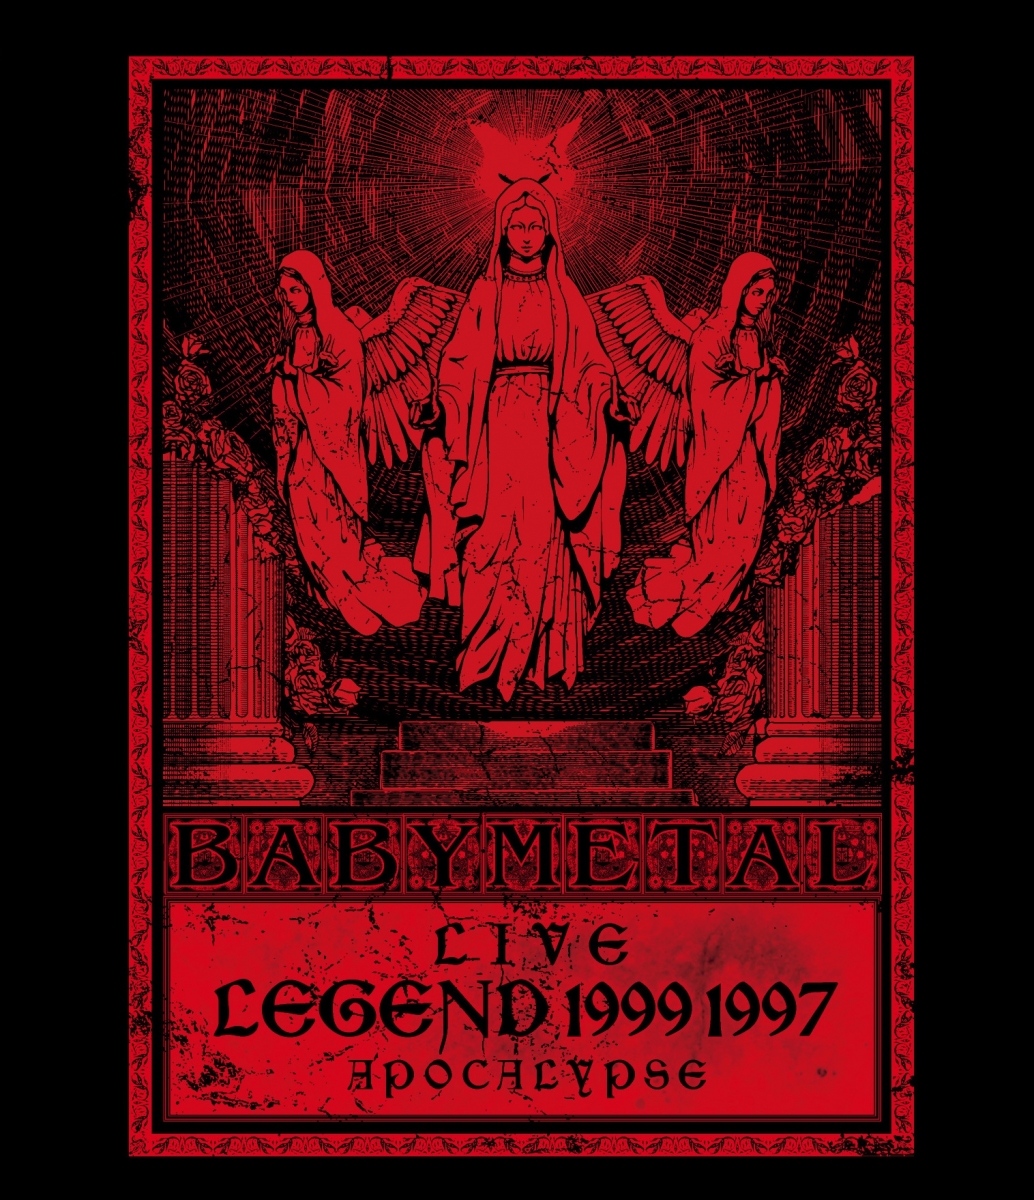 New Revelation from BABYMETAL, Trailer for “LIVE ~LEGEND 1999 & 1997 APOCALYPSE” Unveiled